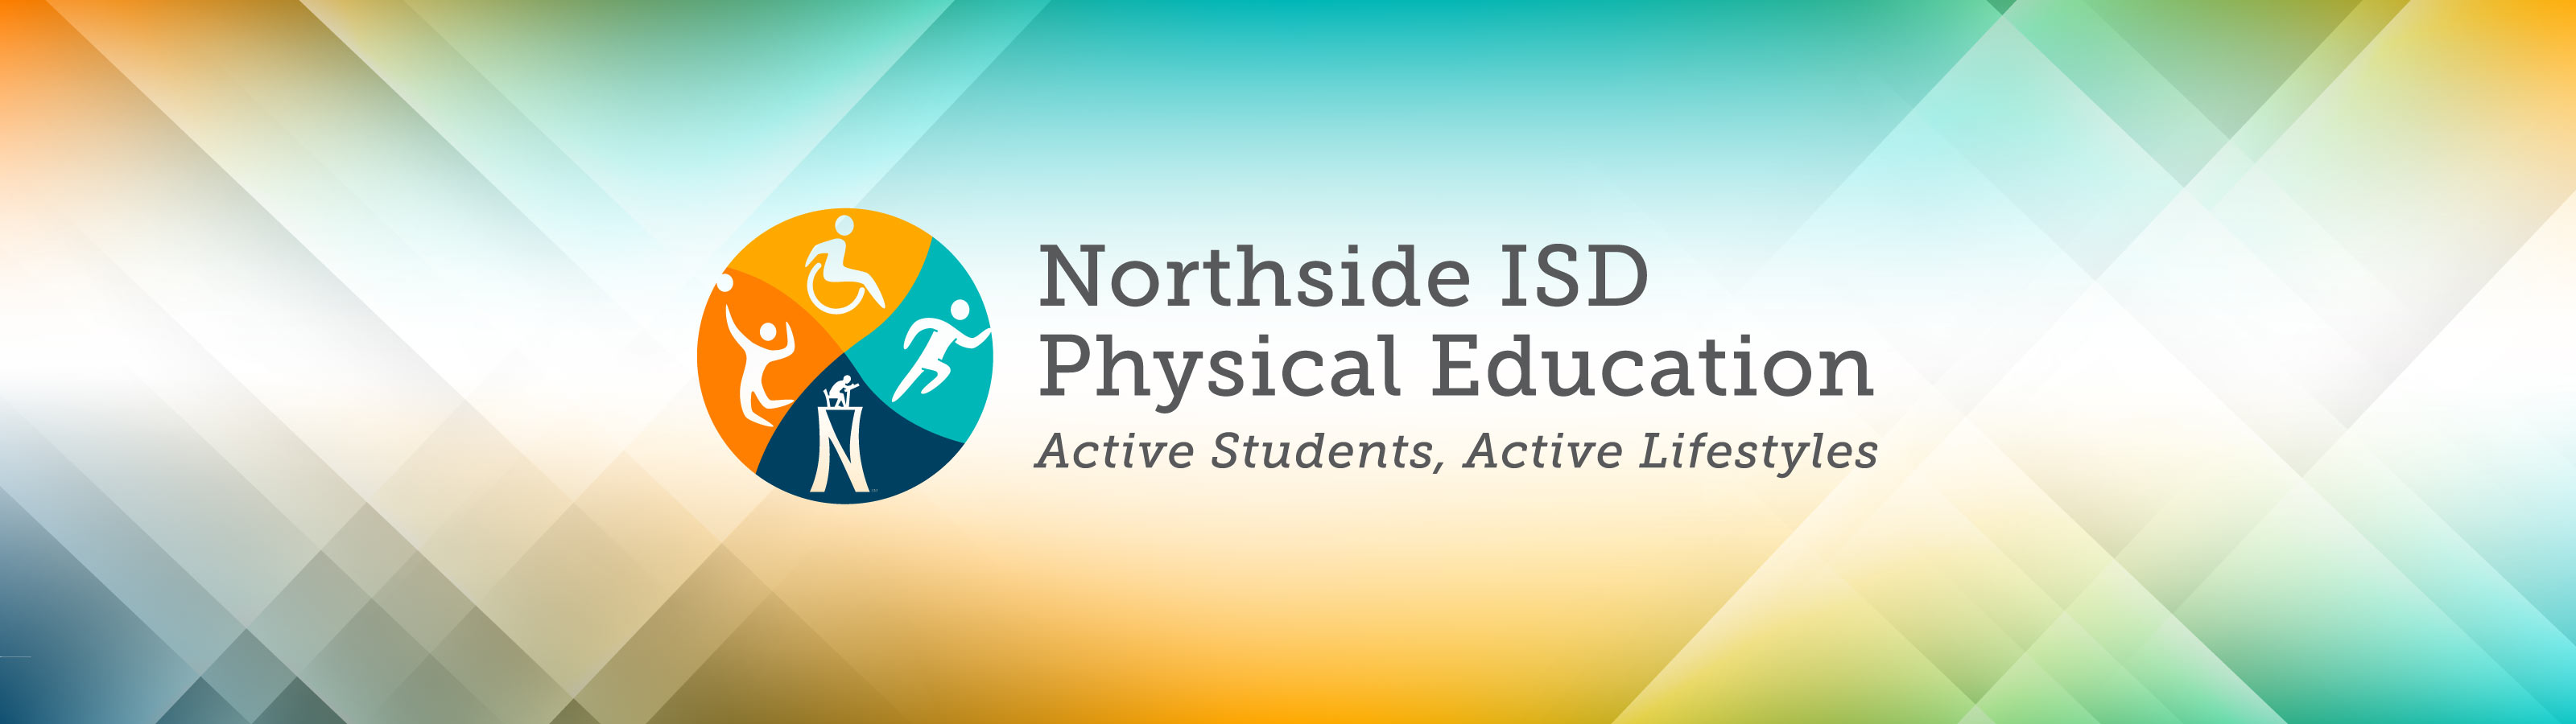 NISD Physical Education